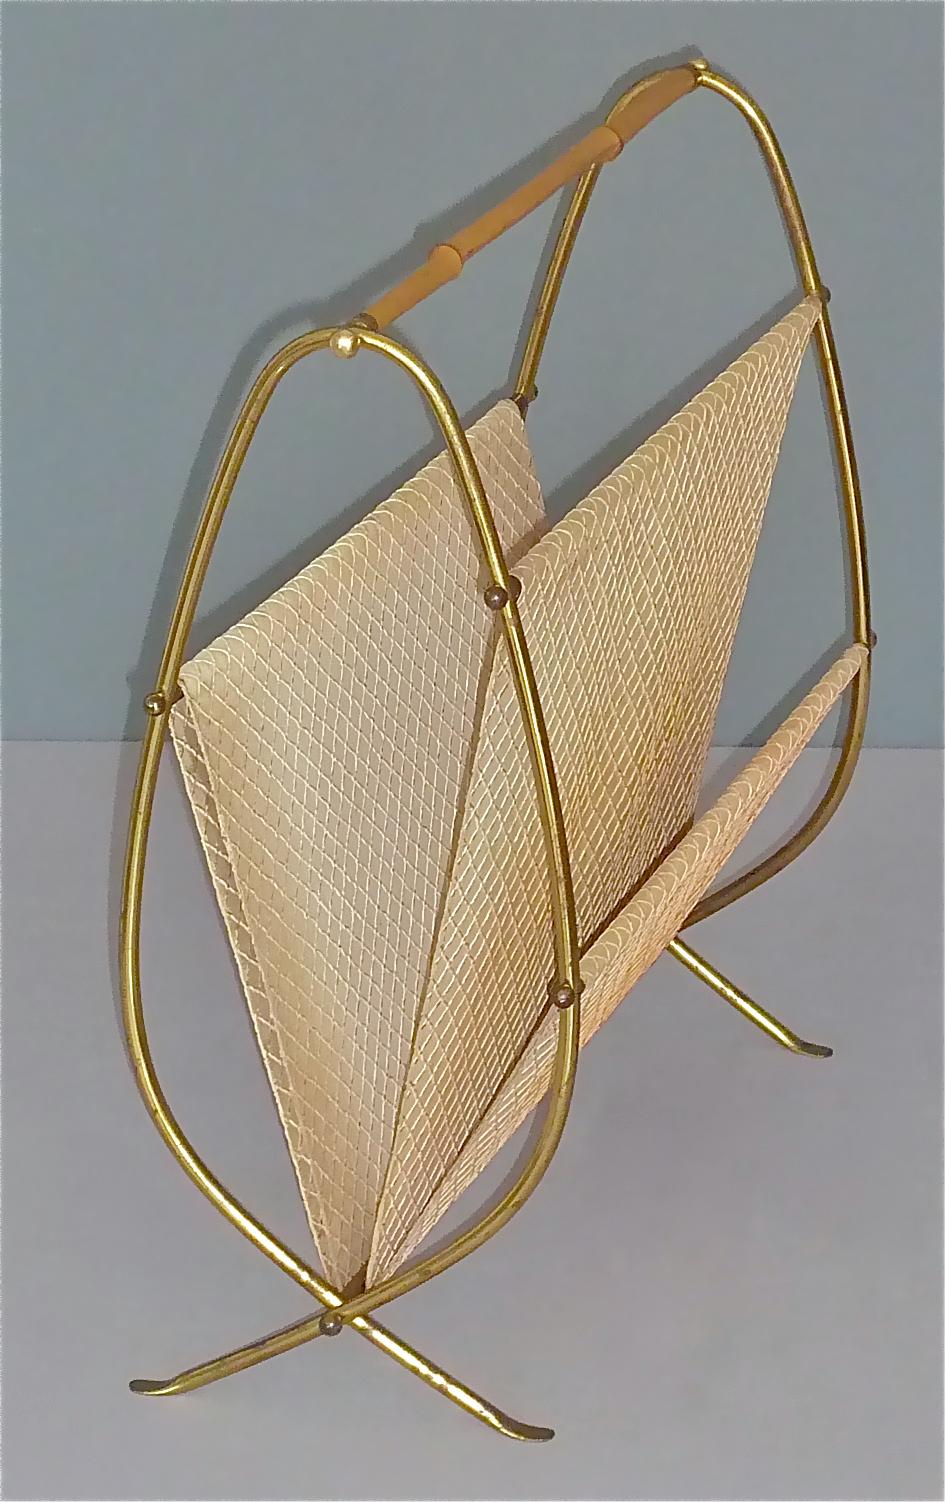 Patinated 1950s Austrian Modernist Magazine Rack Brass Bamboo, Josef Frank, Auböck Style For Sale